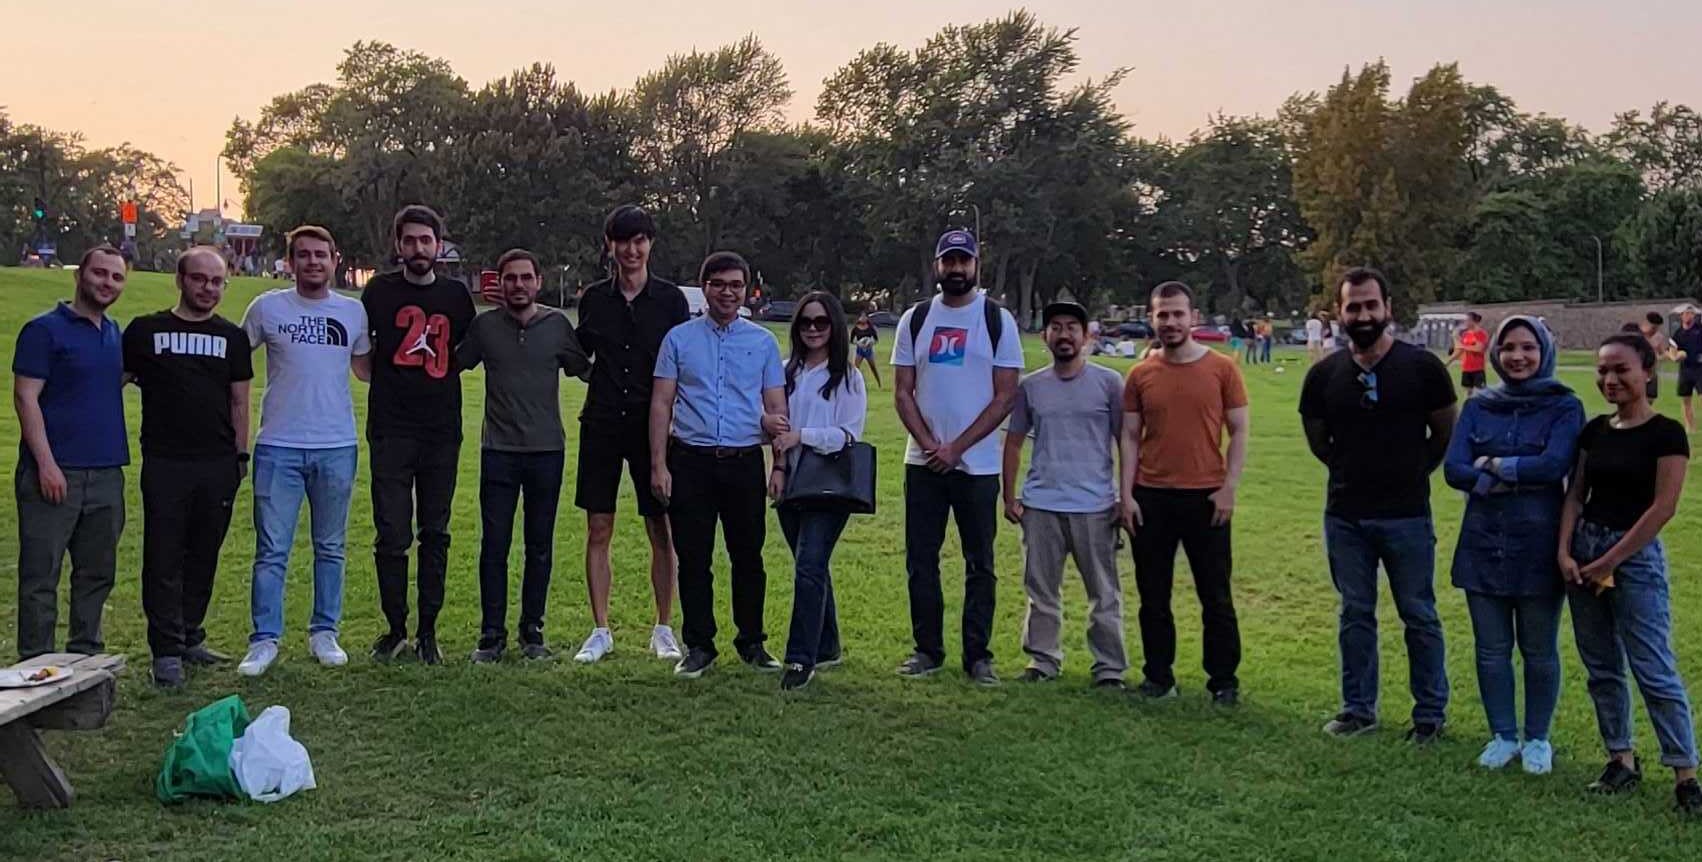 MML group BBQ Summer 2022. From left to right: Hamidreza, Mohammad, Khalil, Erfan, Samir, Minghan, Prof. Sasmito, Mrs. Sasmito, Azlan, Rasyid, Ahmad, Saad, Fatemeh, Ika.